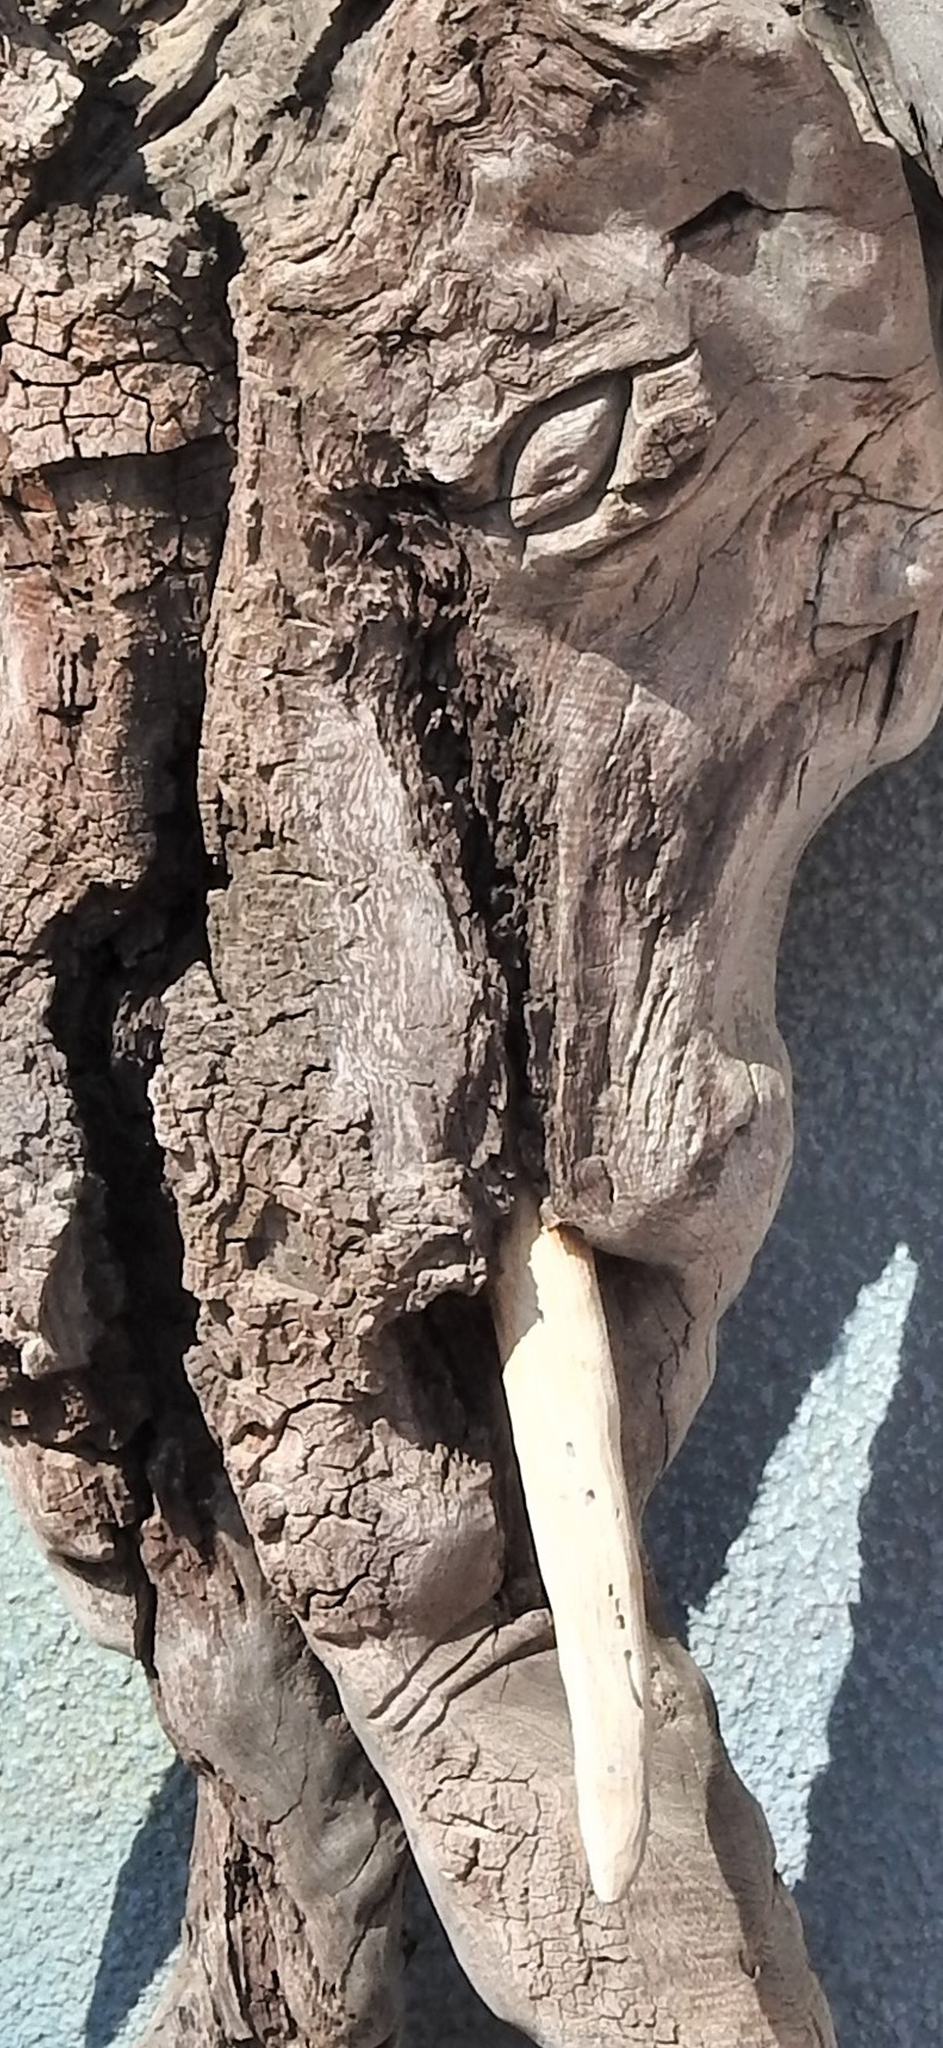 Tikoloshe-afrika-wood-root-carving